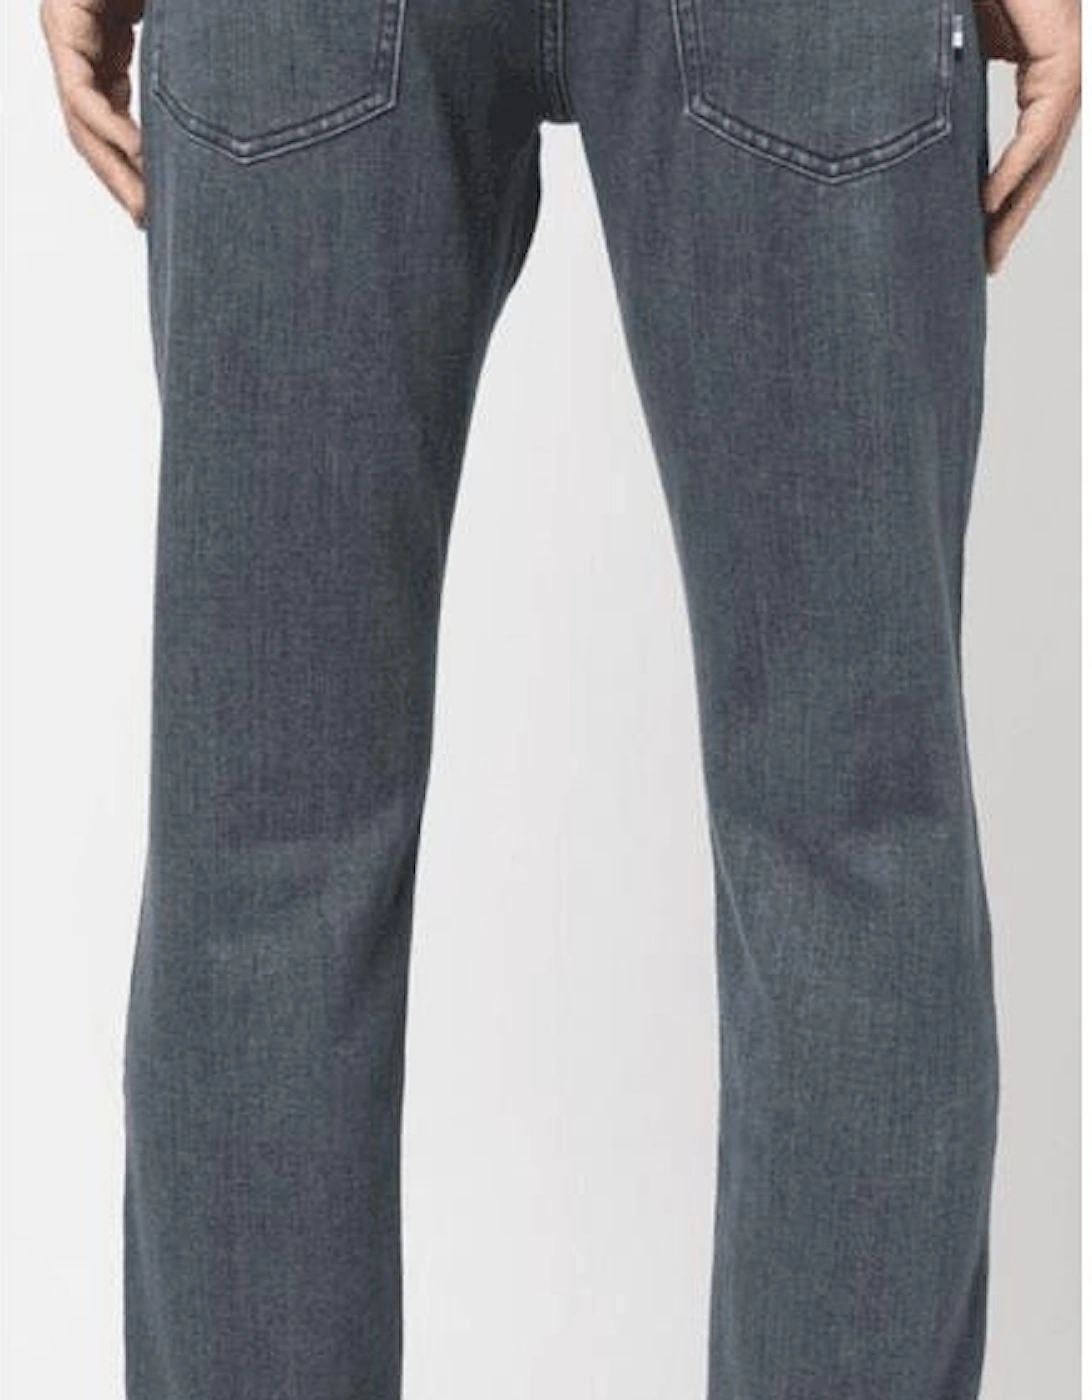 Delaware 3-1 Slim Fit Organic Cotton Grey Jeans